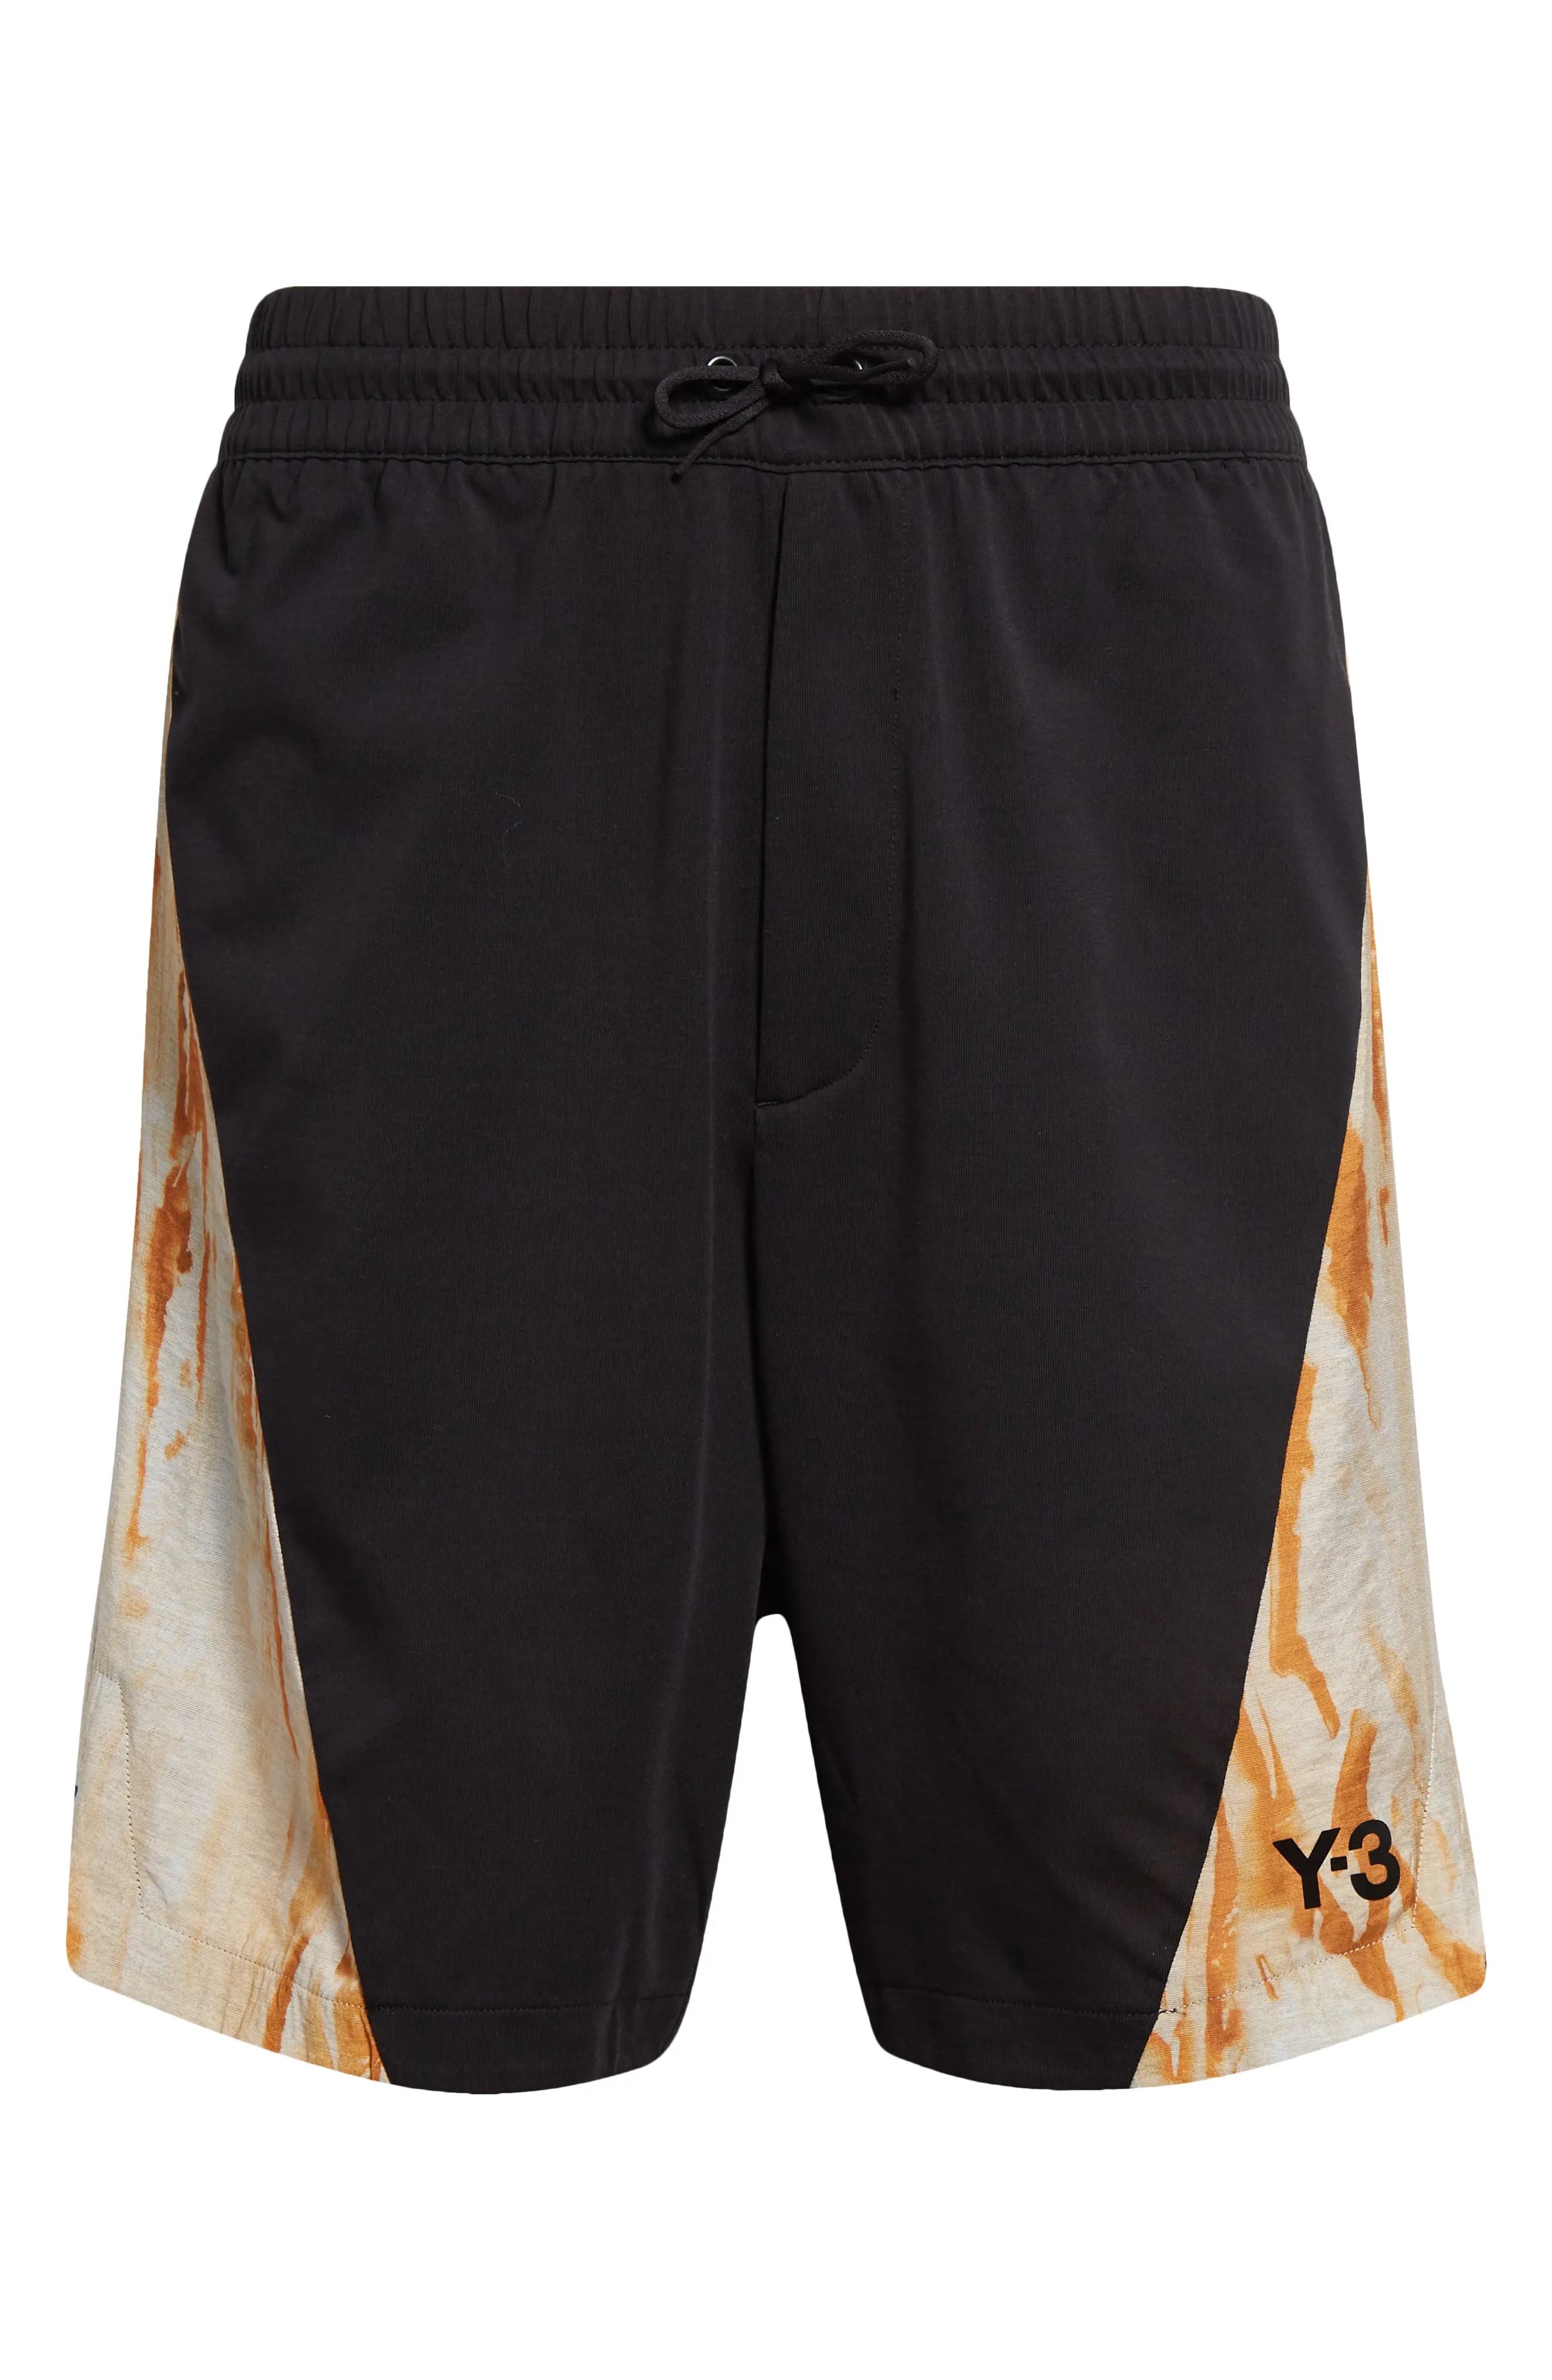 Rust Dye Drawstring Shorts in Black/Multi Color Camo - 6